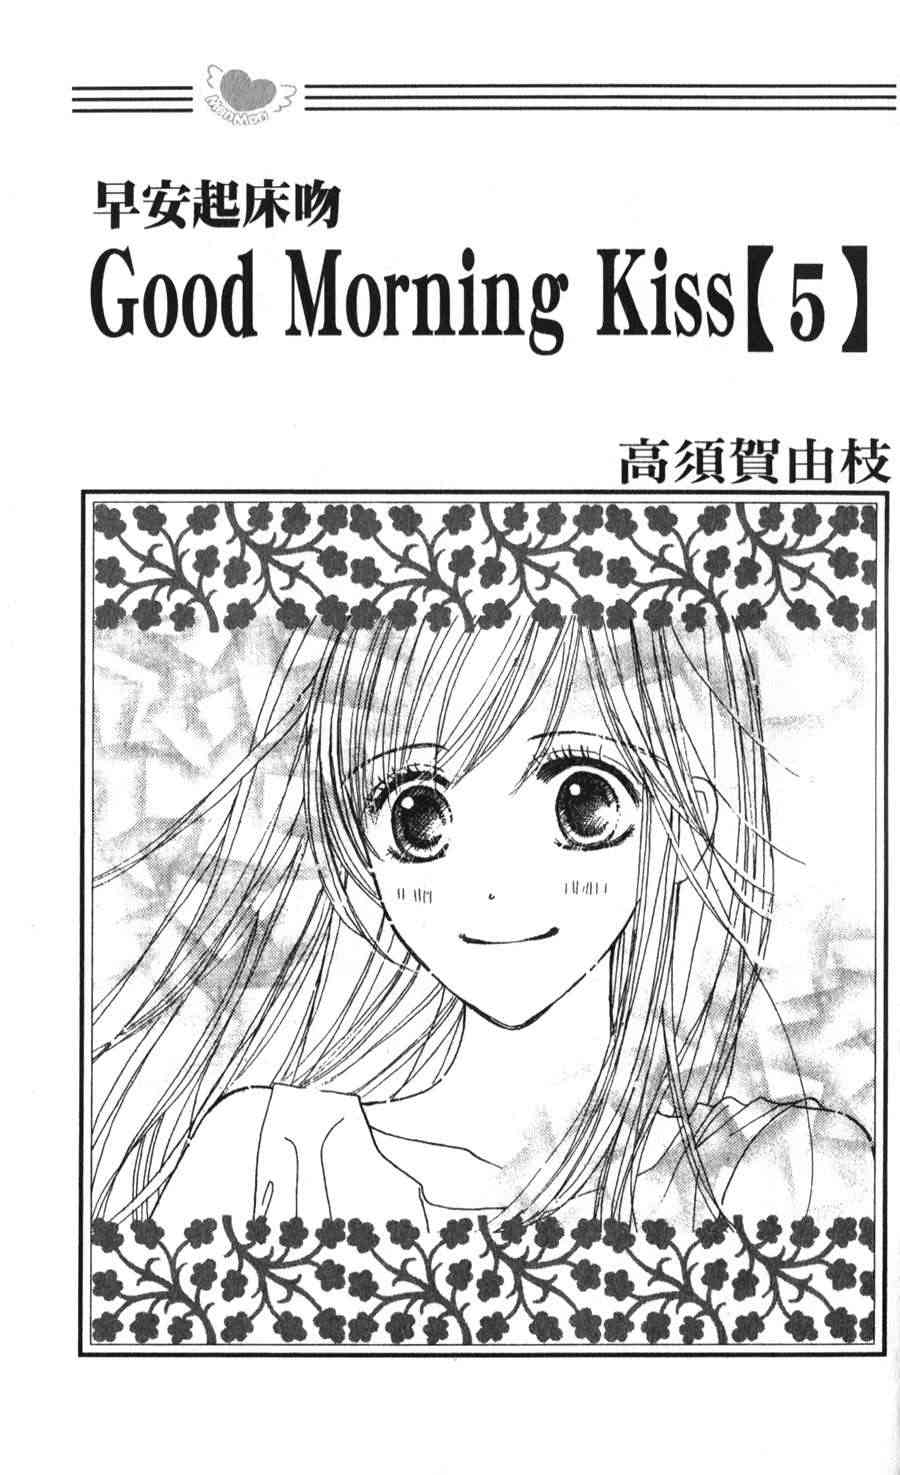 Good Morning Kiss - 5卷(1/3) - 2